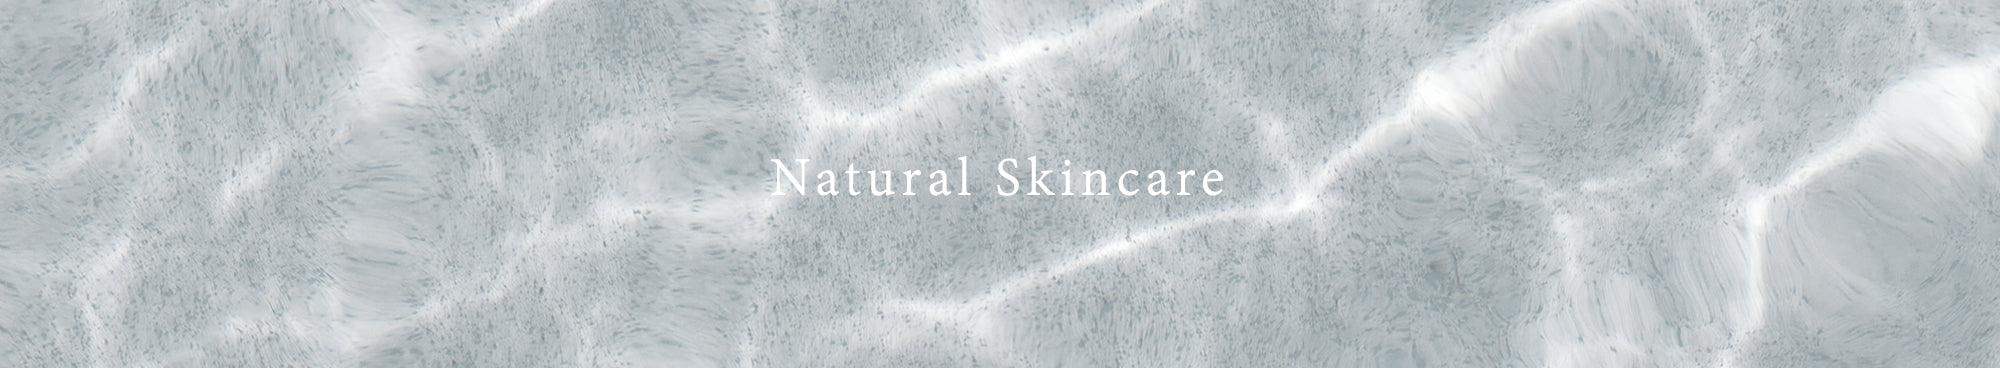 Natural Skincare - Rikumo